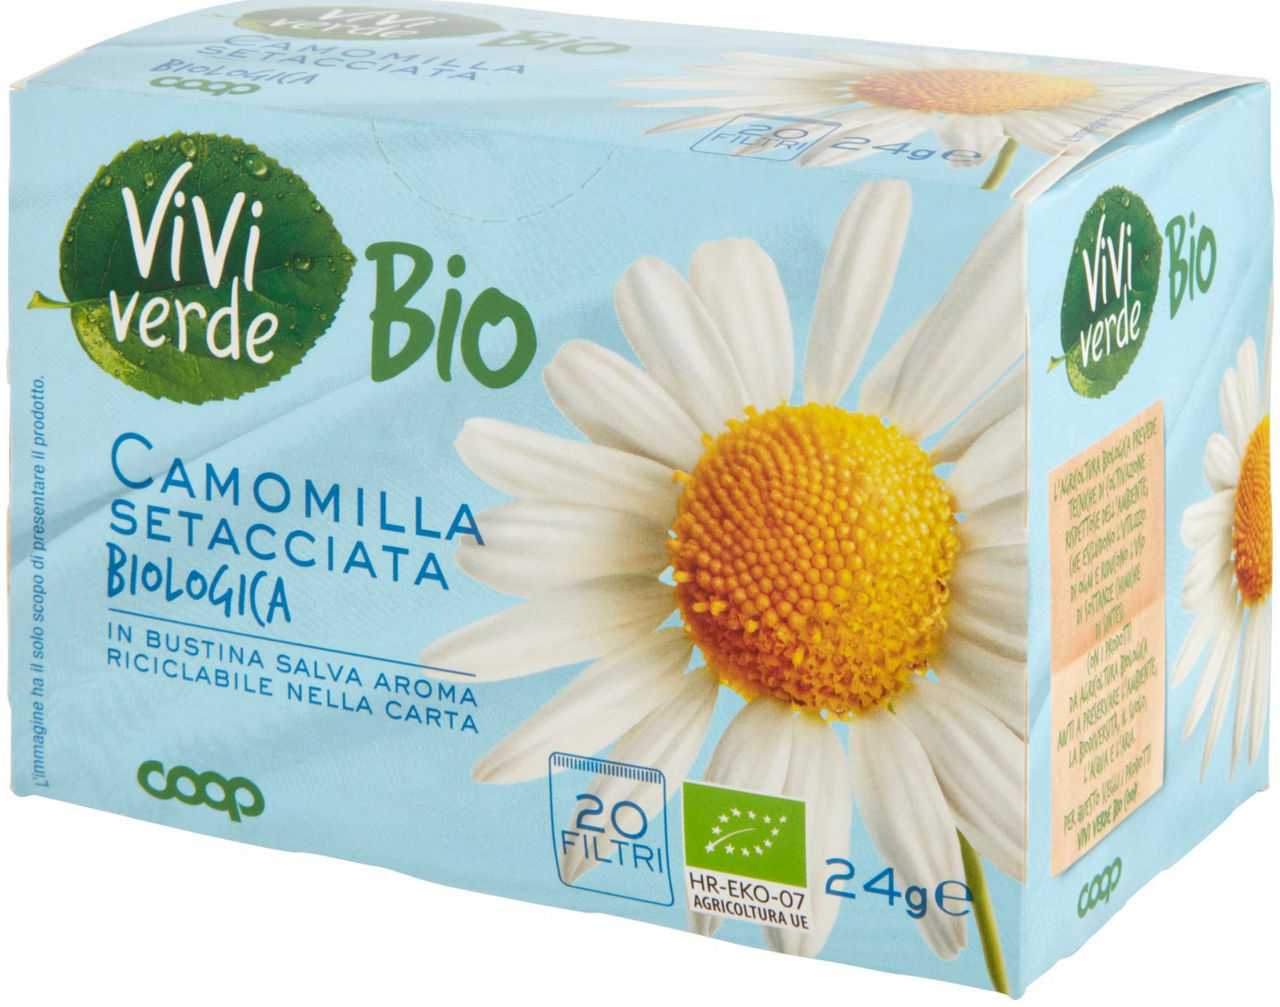 Camomilla bustina biologica  20 filtri Vivi Verde 24G - 6